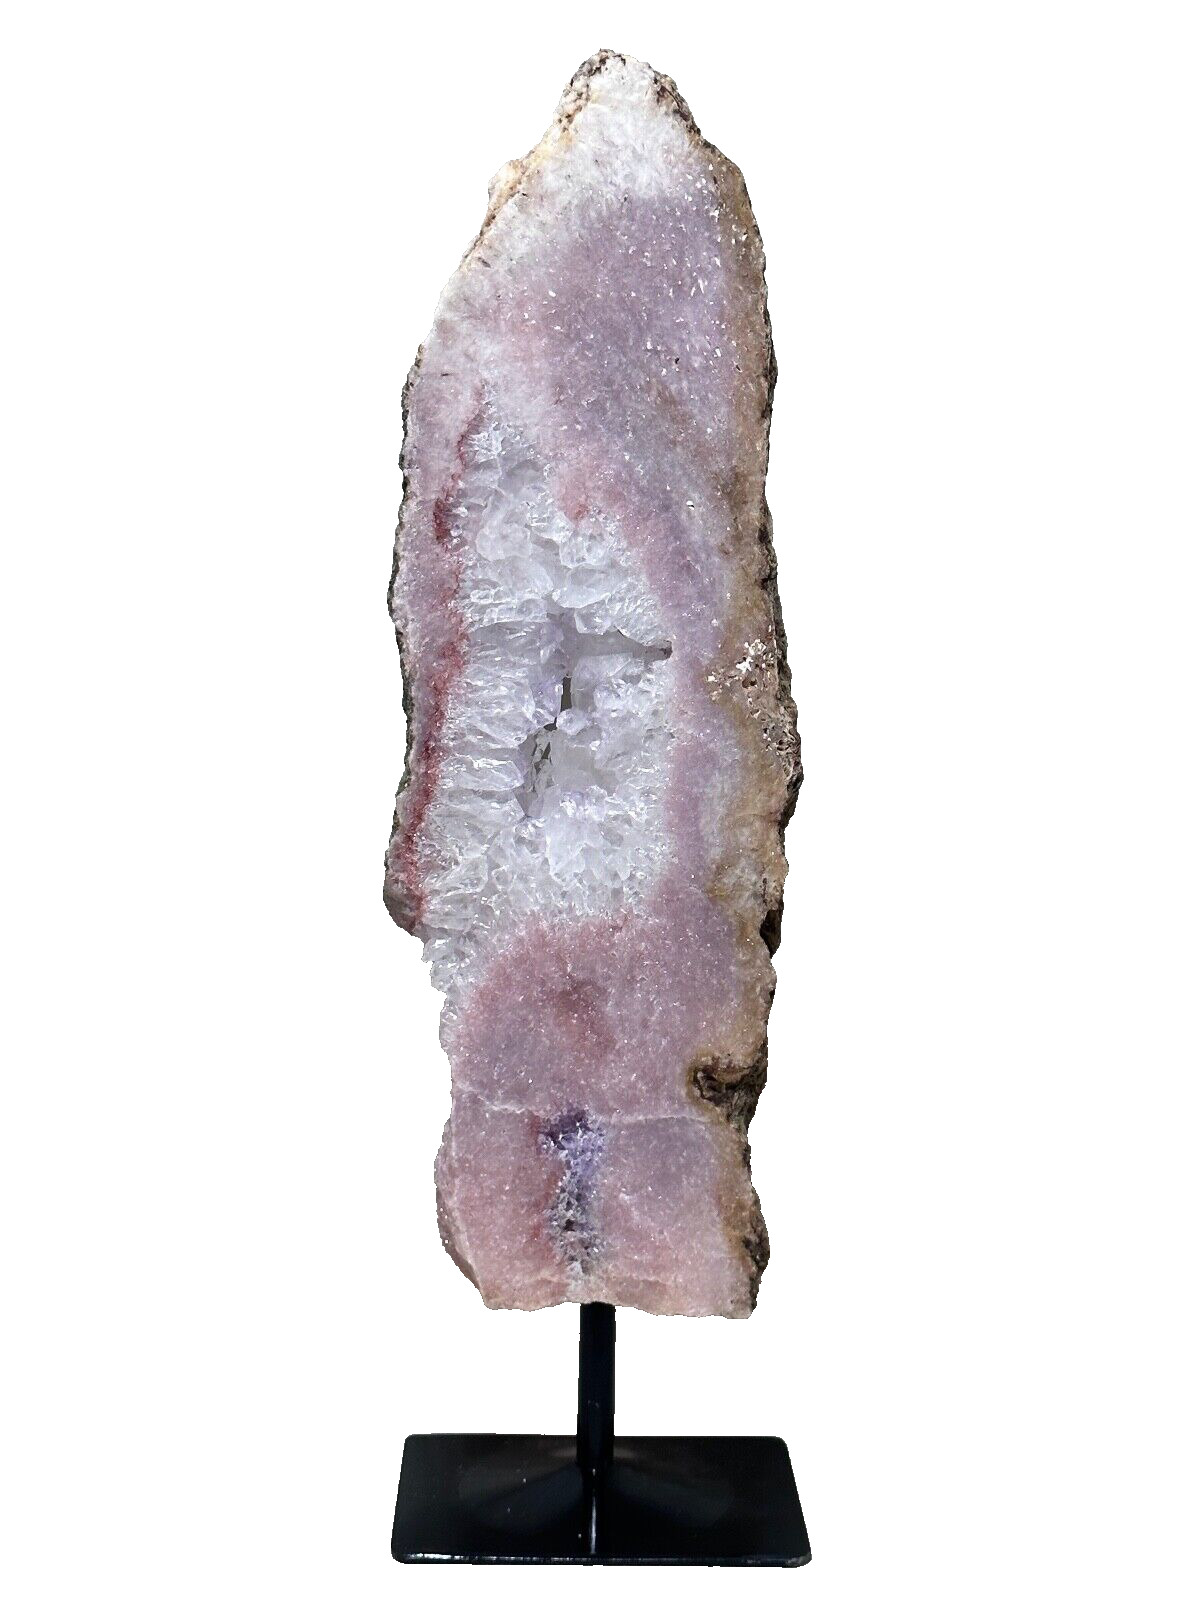 Super Pretty High Grade Pink Amethyst on stand Specimen Crystal Geode Brazil